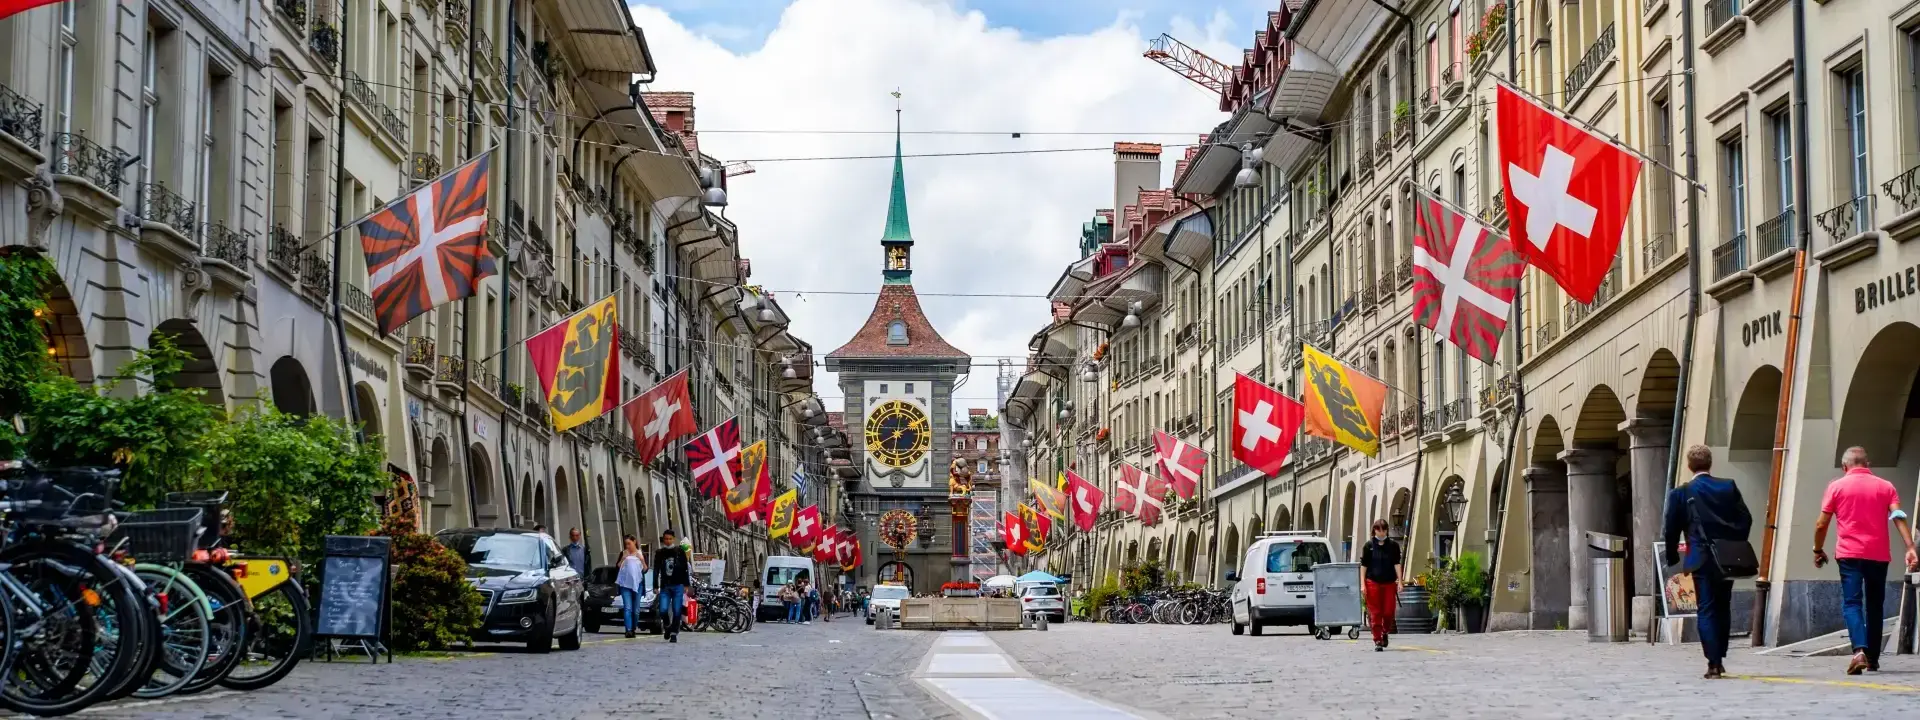 Bern Region Switzerland